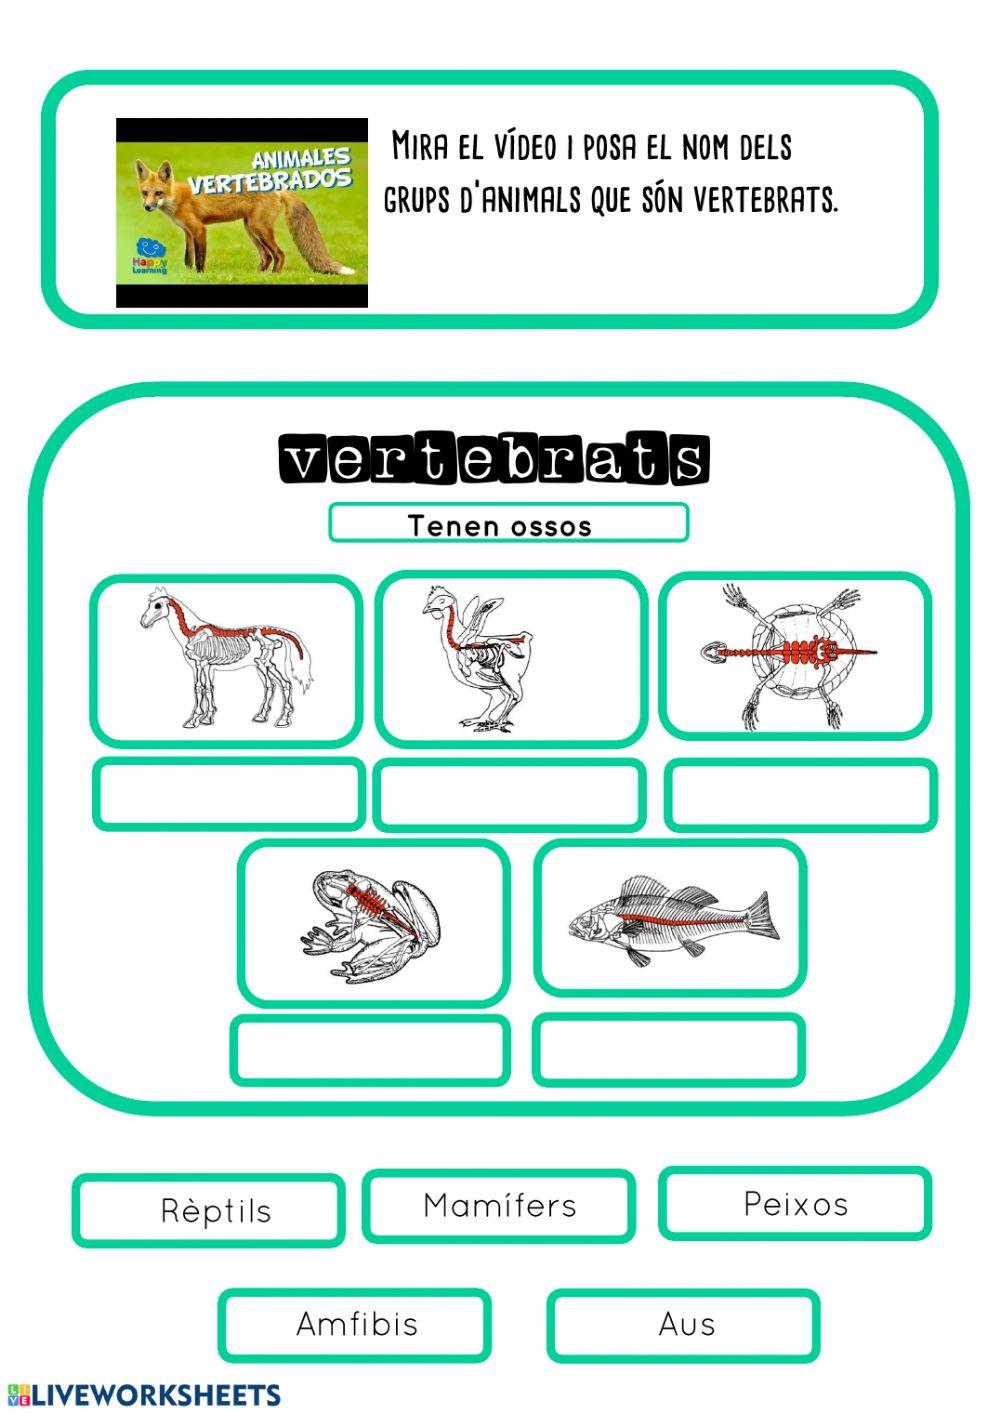 Animals vertebrats